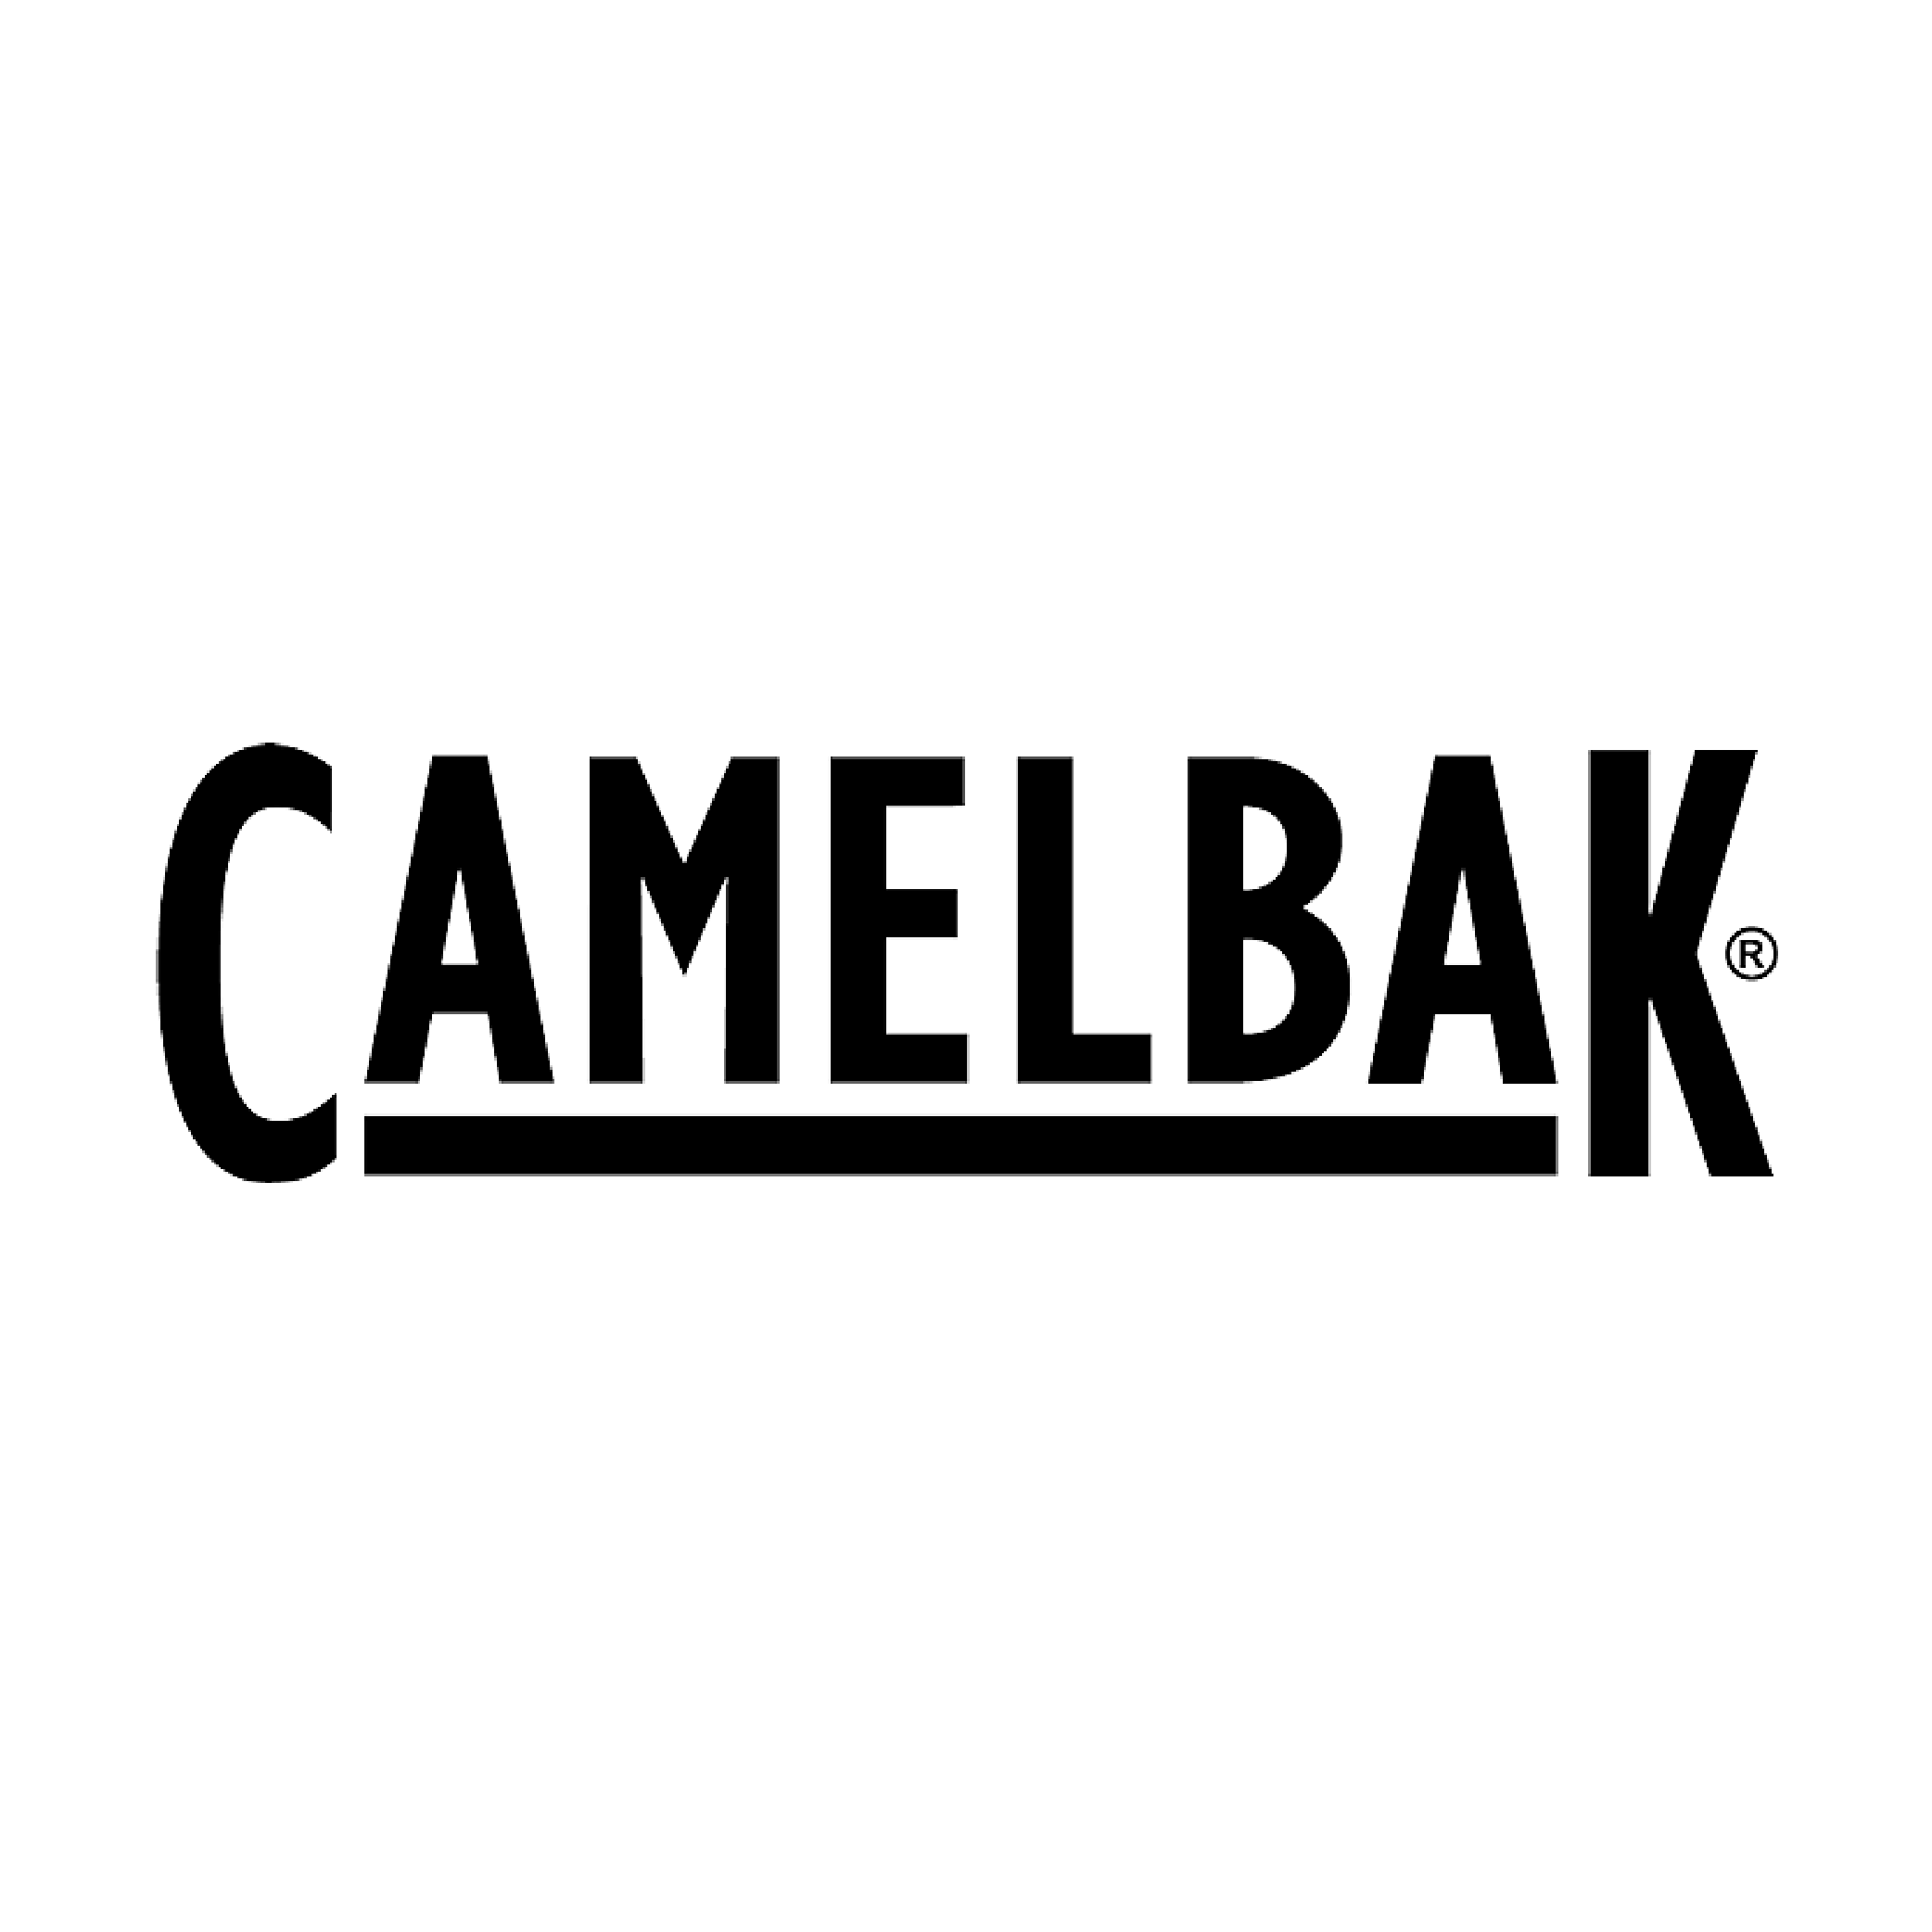 Camelbak.png